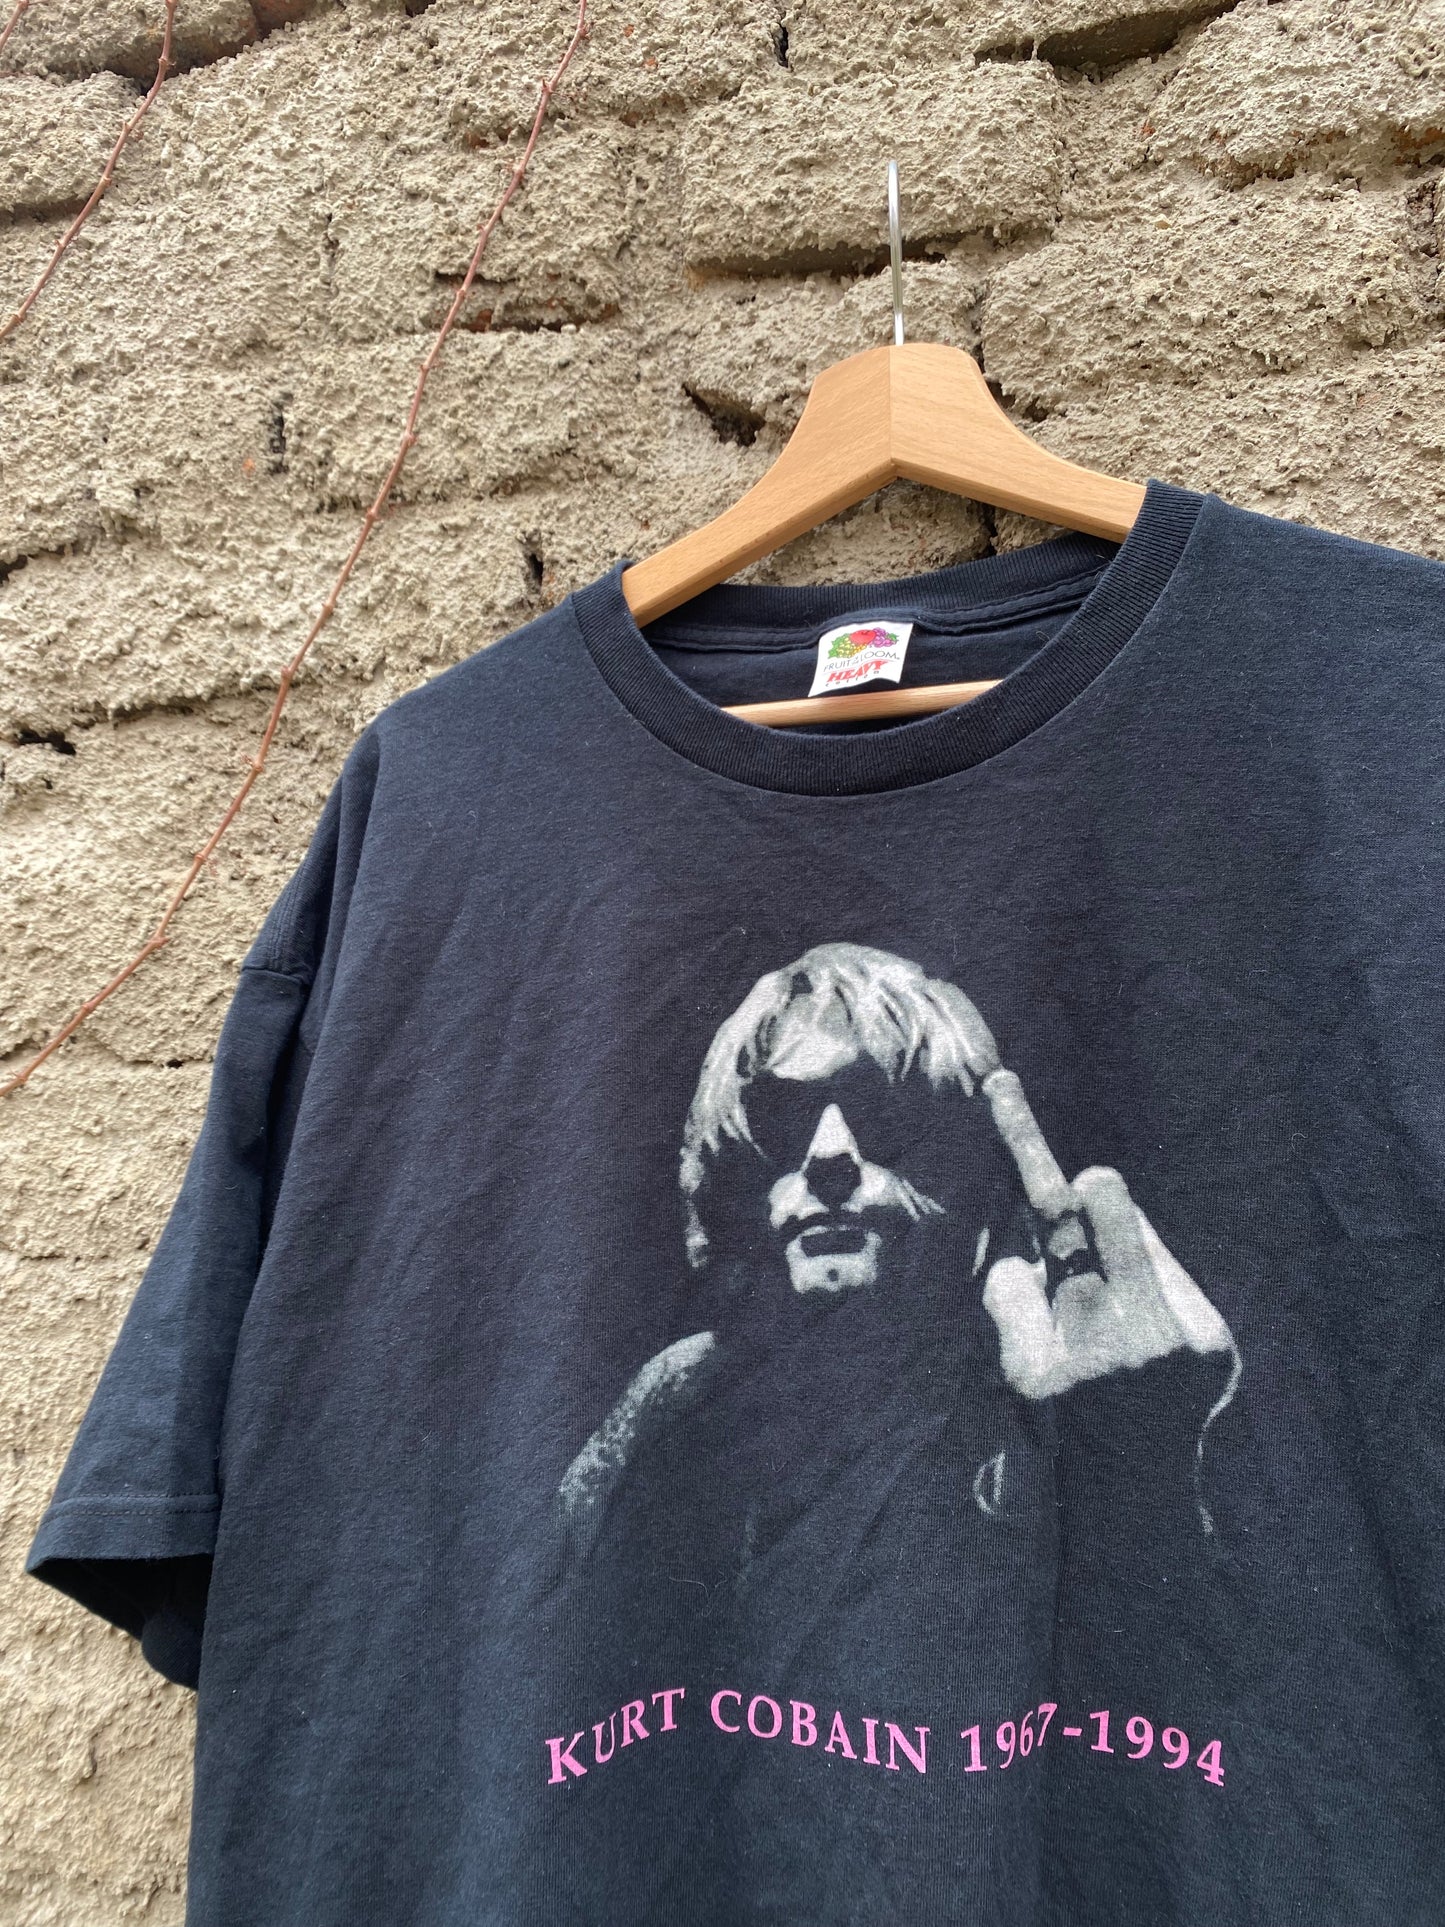 Vintage Kurt Cobain Nirvana Memorial t-shirt - size XL